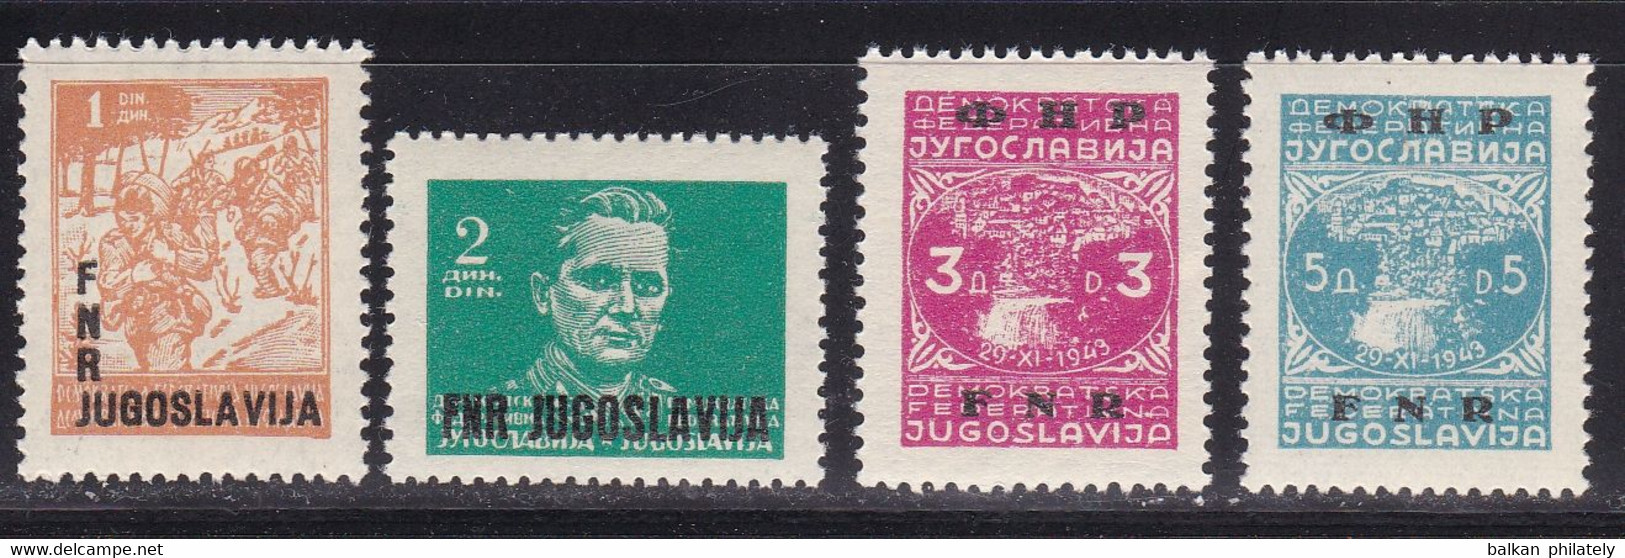 Yugoslavia 1950 Partisan Partisans Josip Broz Tito Definitive Stamps MNH - Nuovi